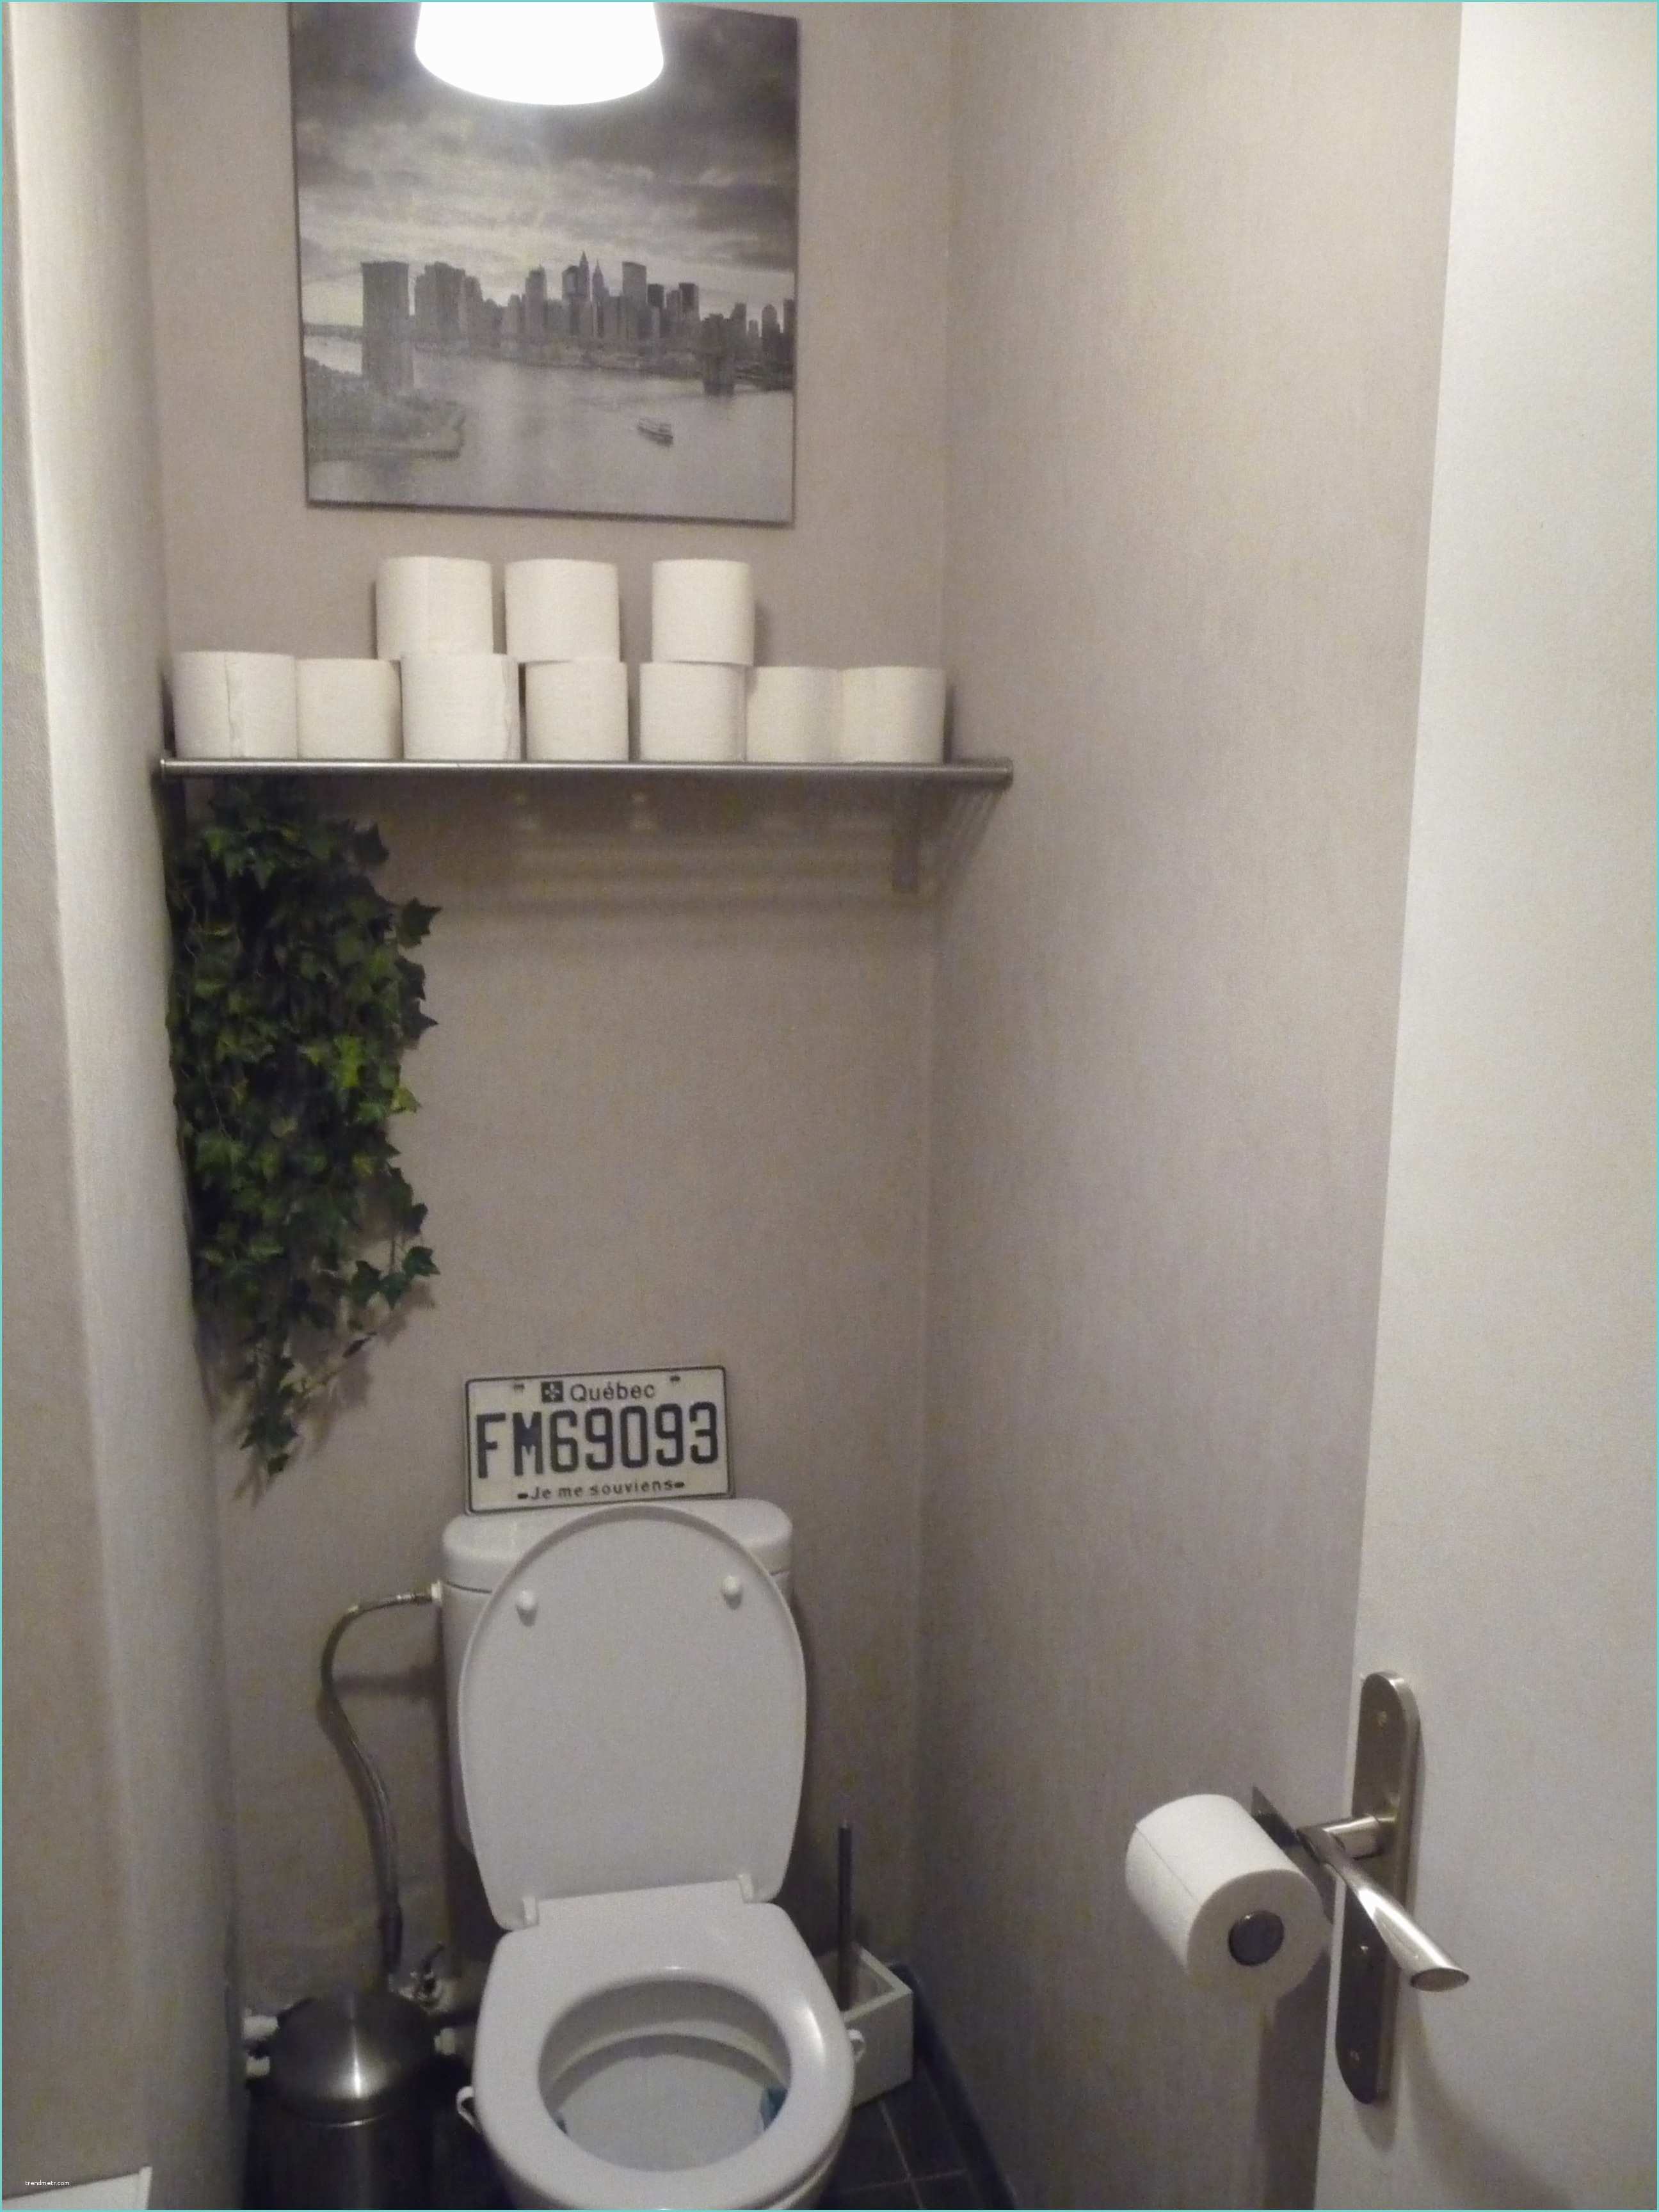 Idee Peinture Wc Deco toilette Gris Galerie Avec Deco Wc original Avec and